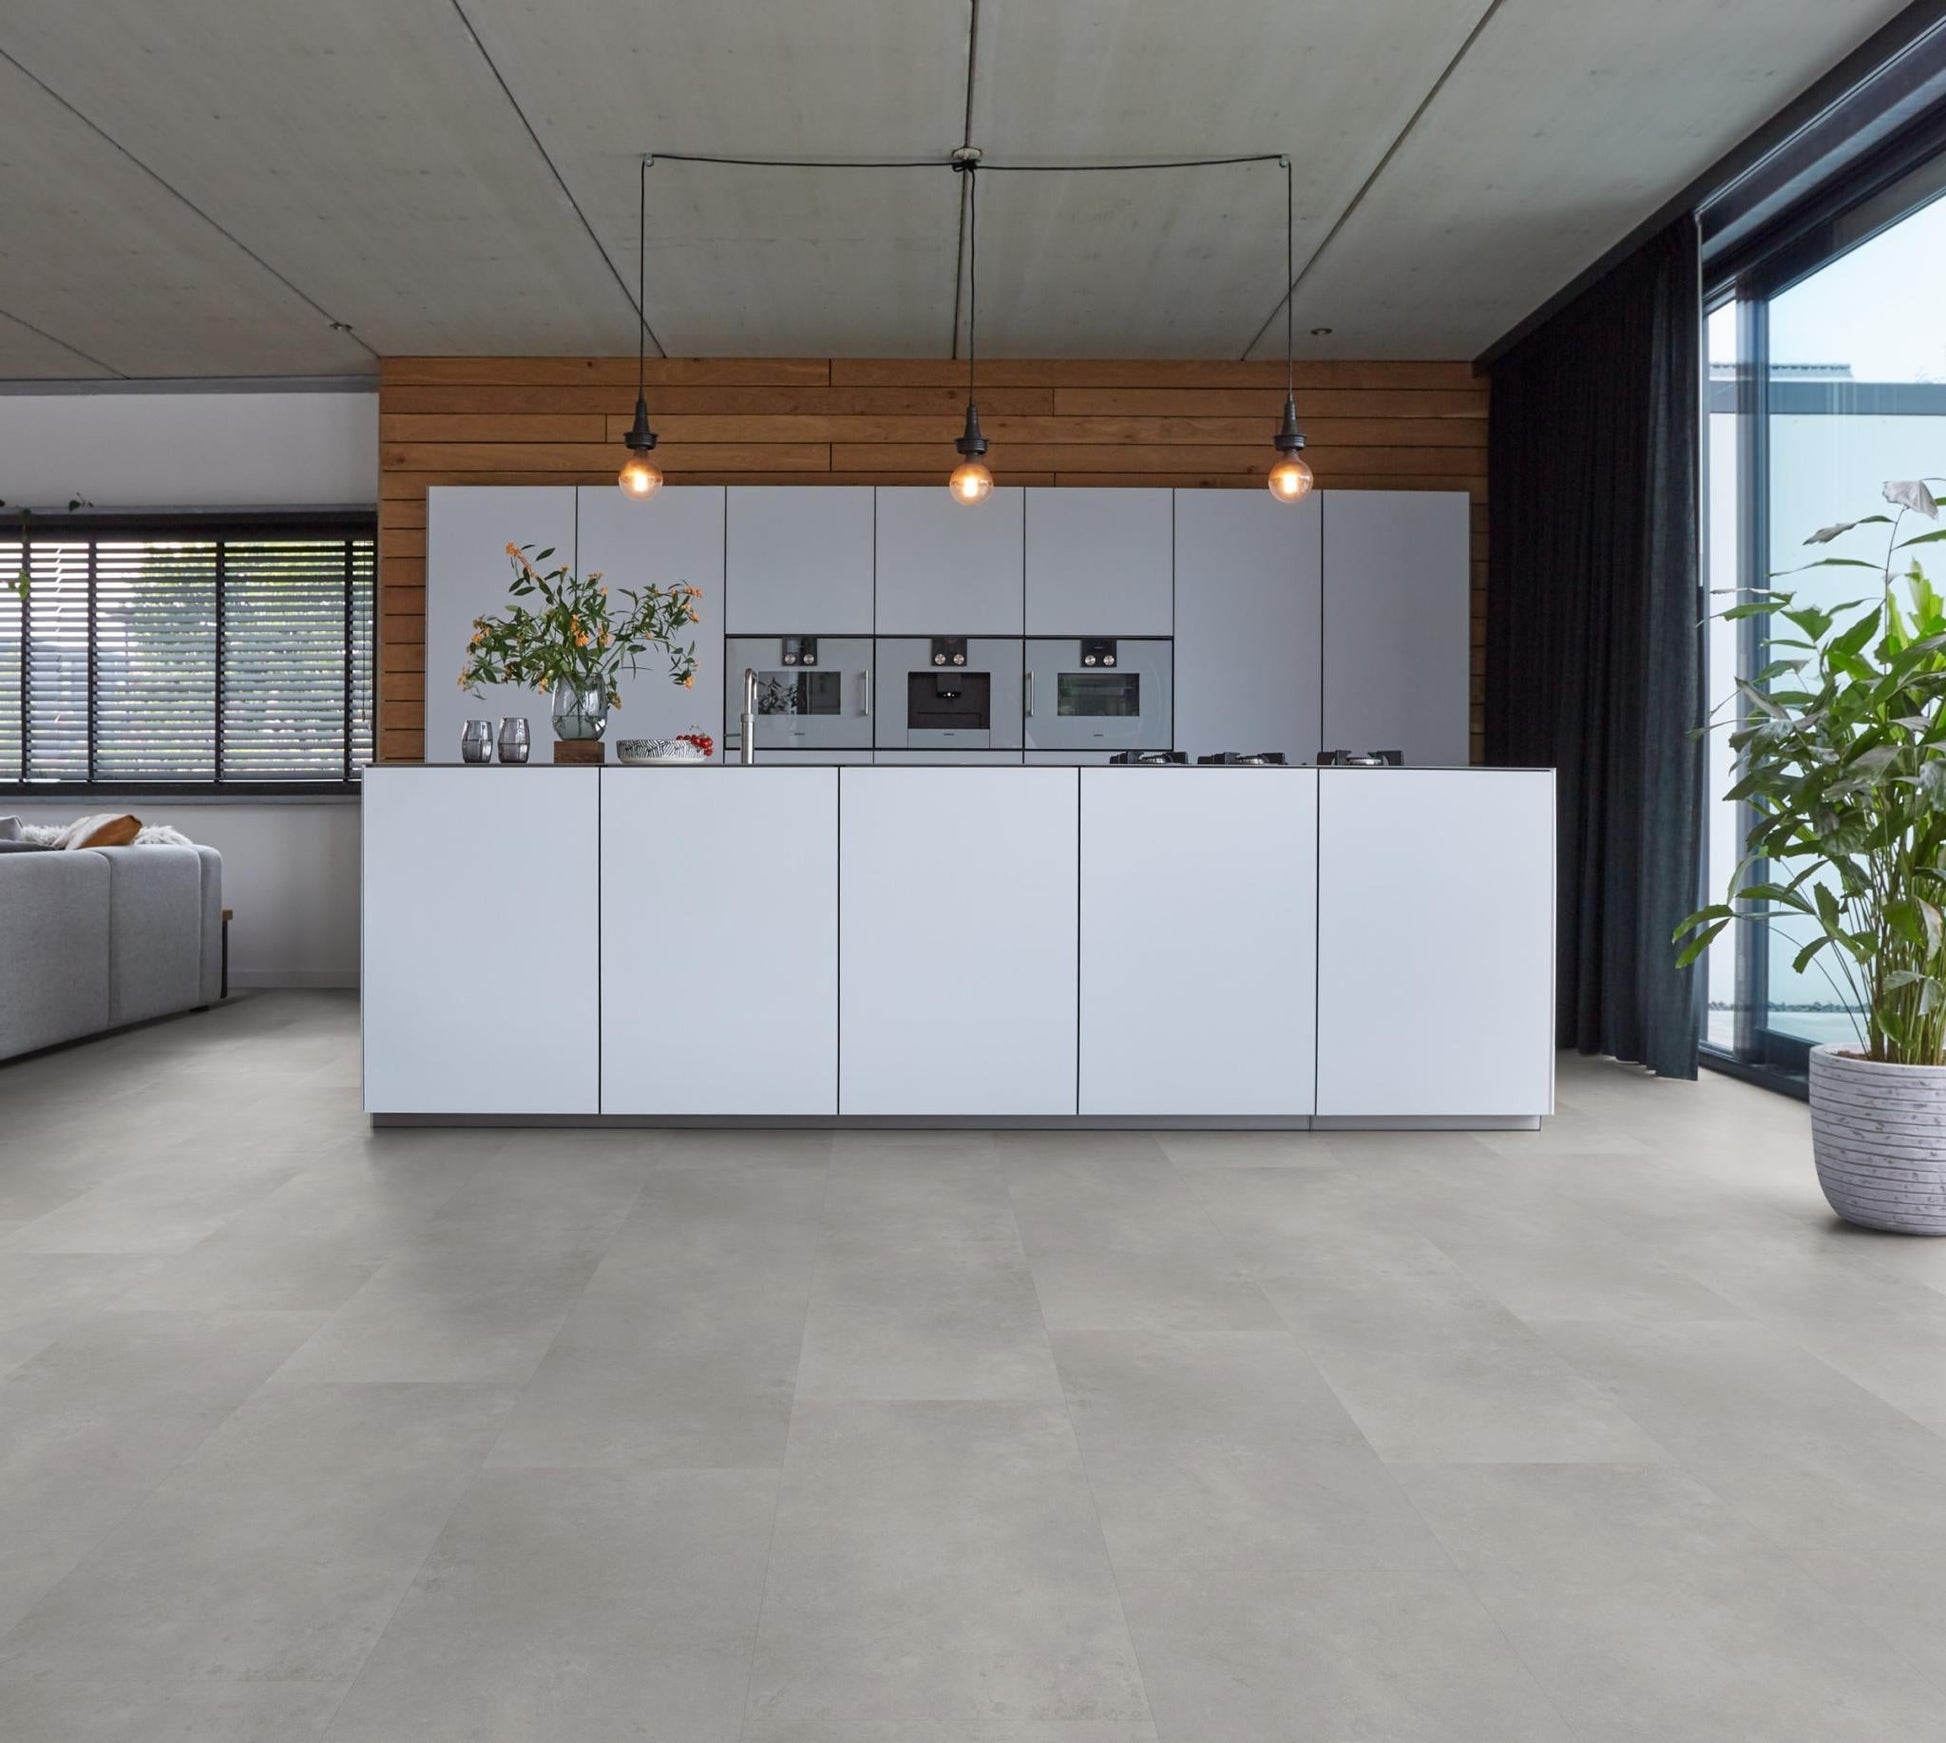 Floorlife Click PVC Tegel Southwark Grey 4313 - 91.4 x 45.7 cm - Solza.nl